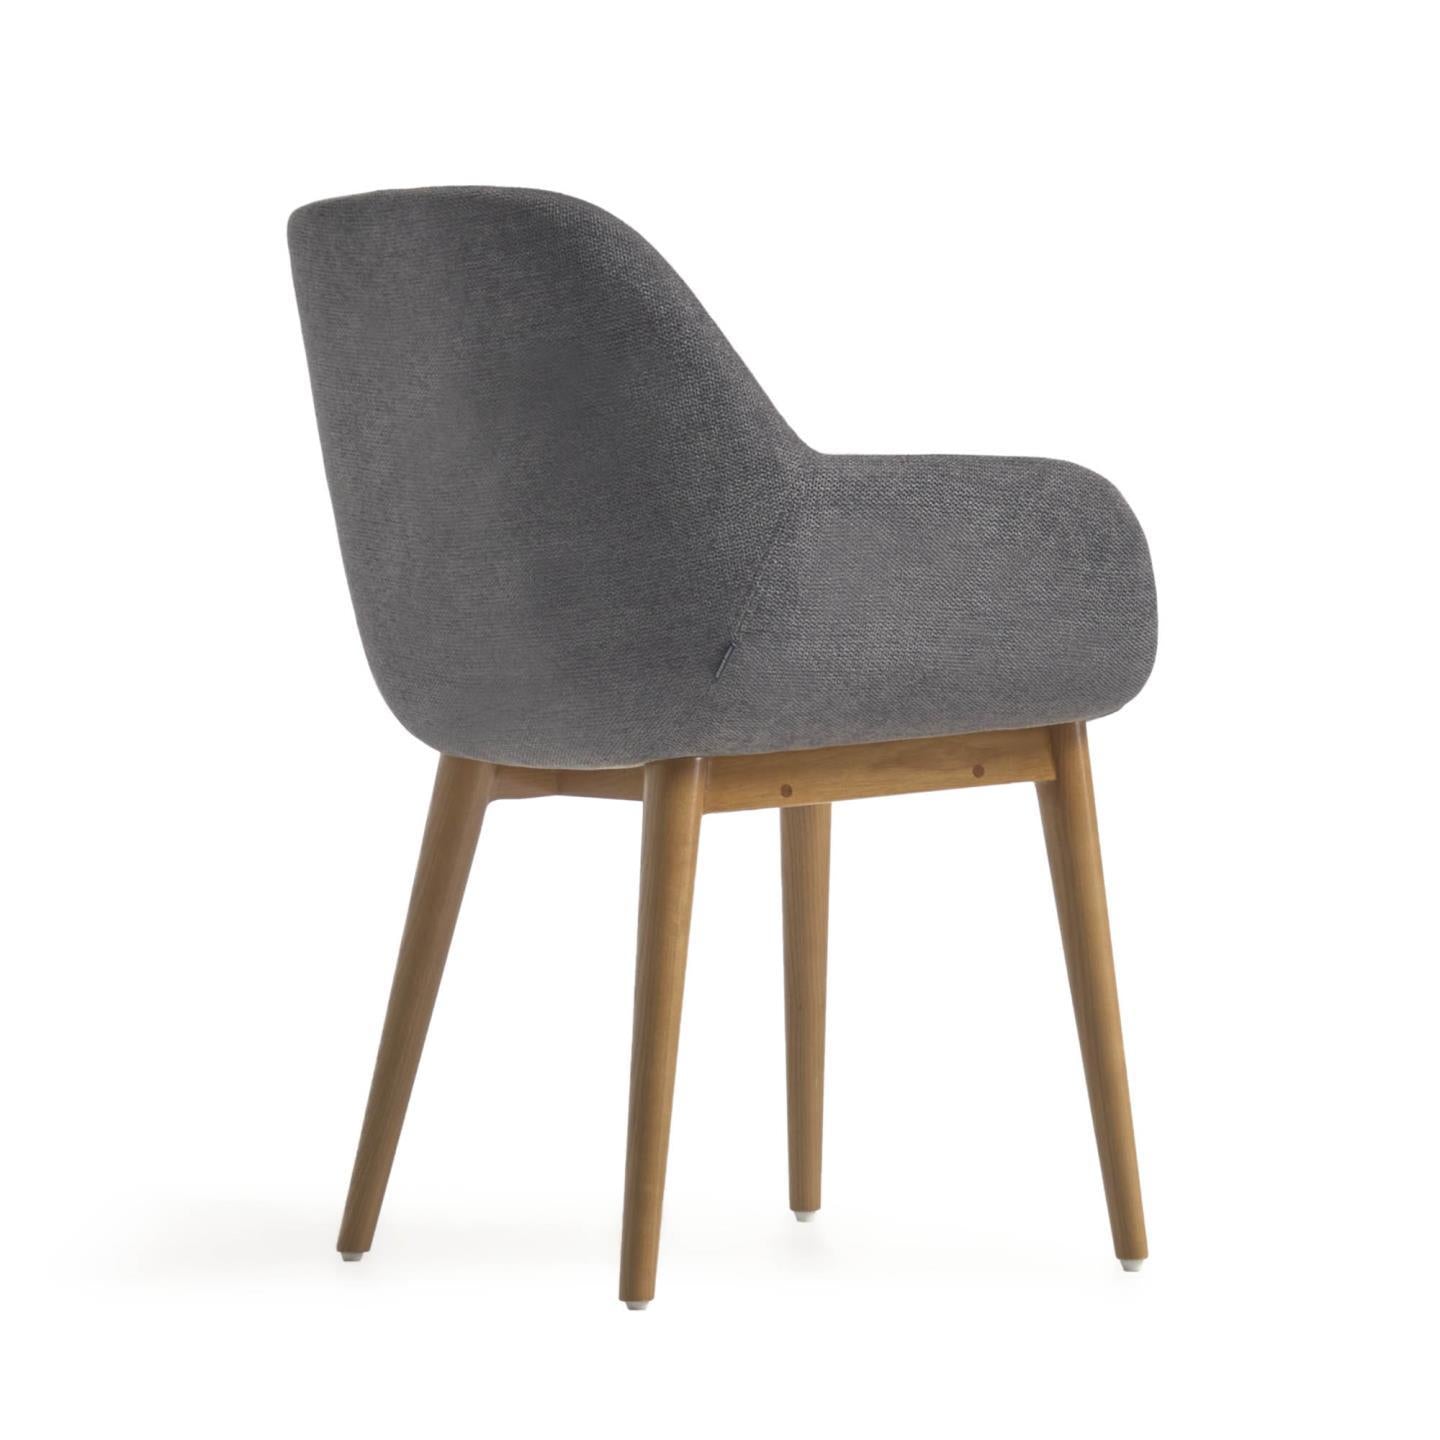 Konna chair in dark grey with solid ash wood legs in a dark finish